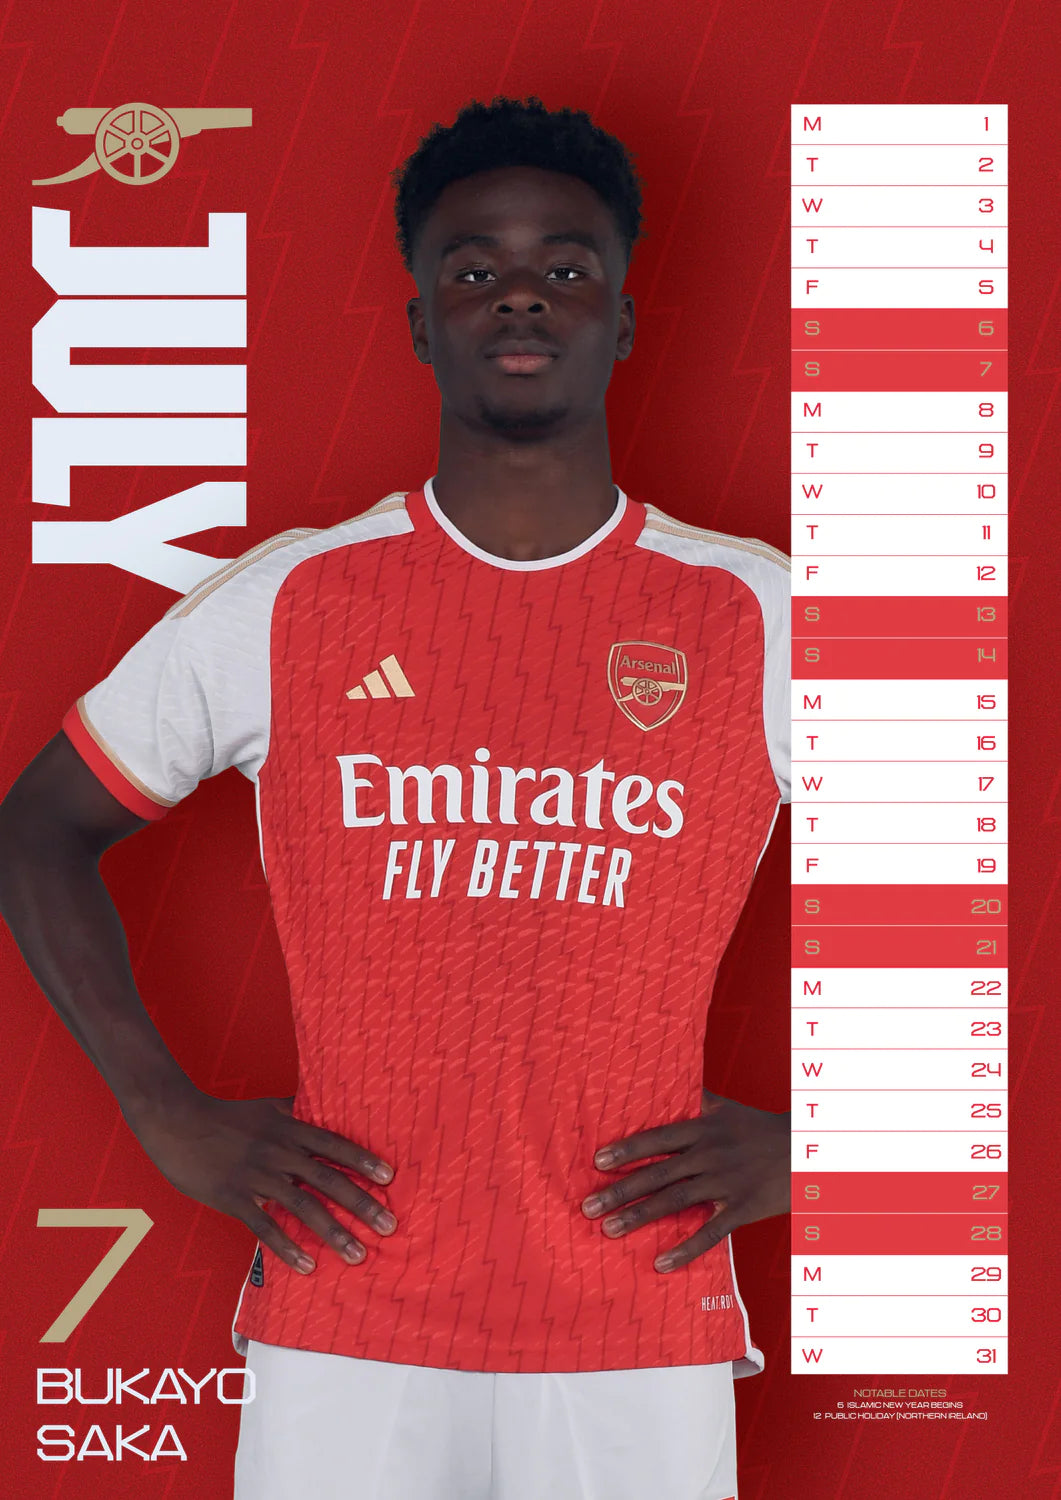 2024 Arsenal FC - A3 Wall Calendar